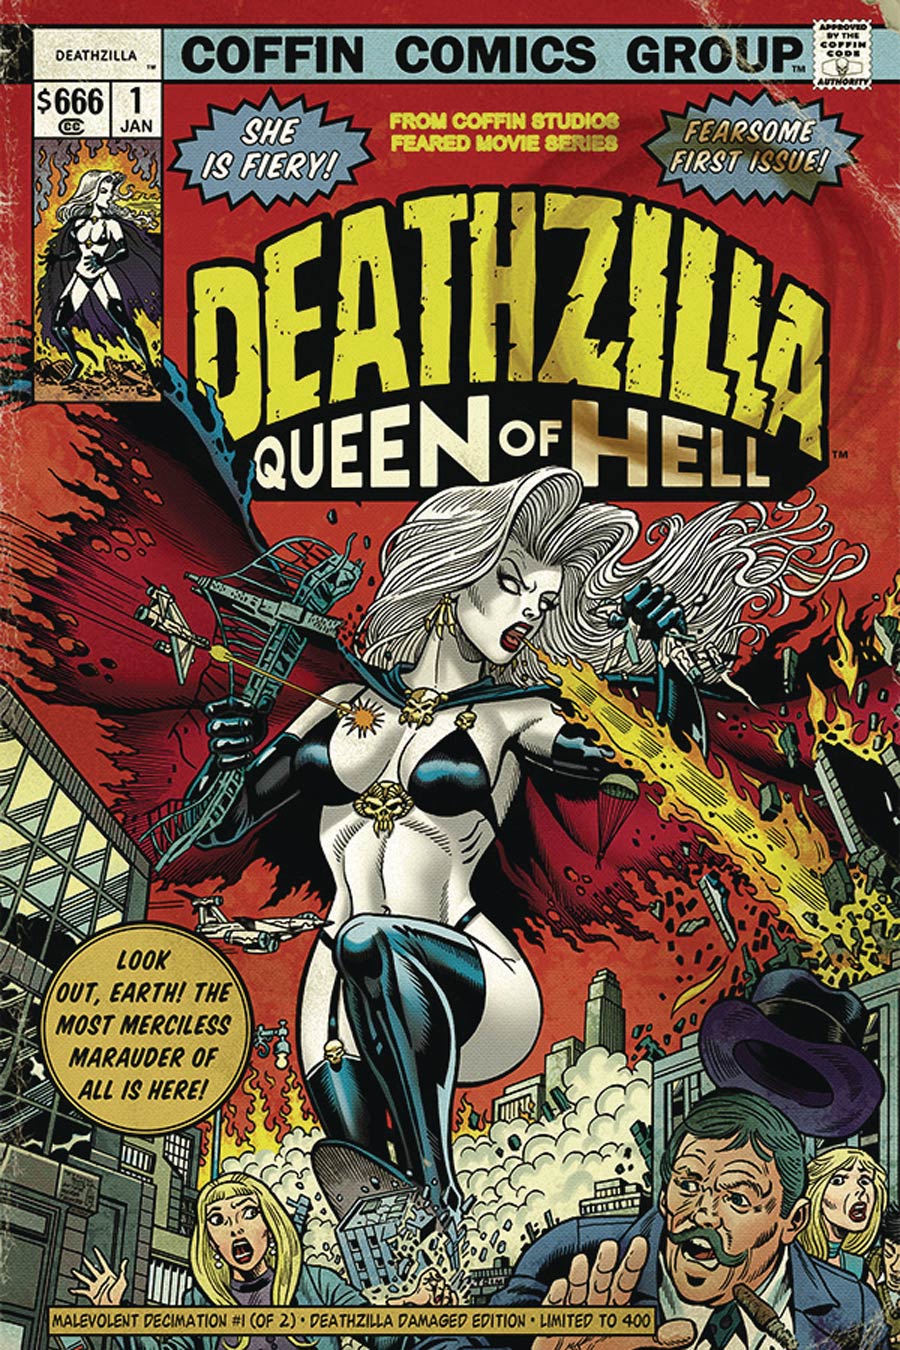 Lady Death Malevolent Decimation #1 Cover F Deathzilla Damaged Edition